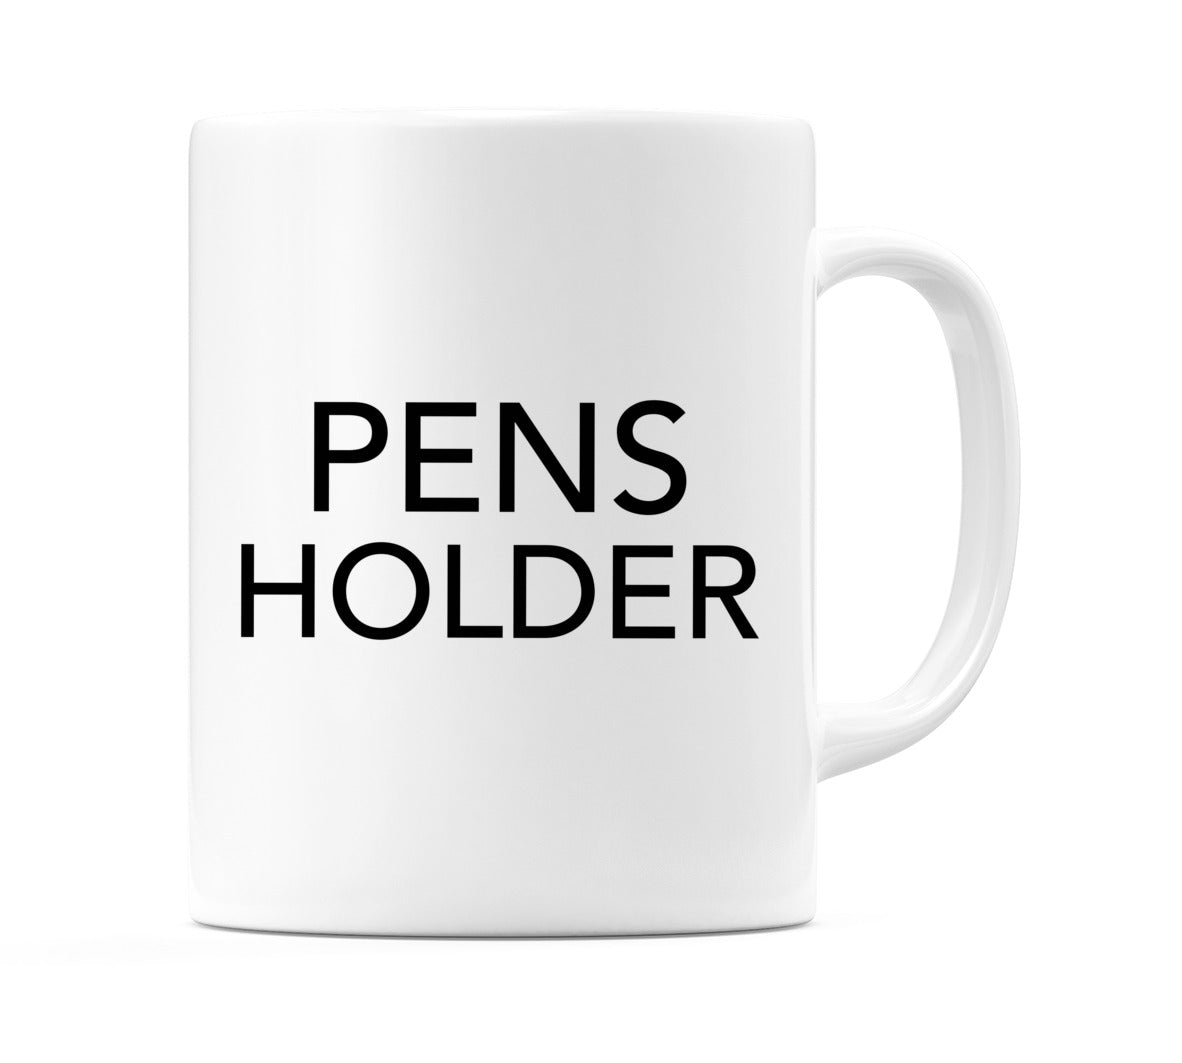 PENS HOLDER Mug